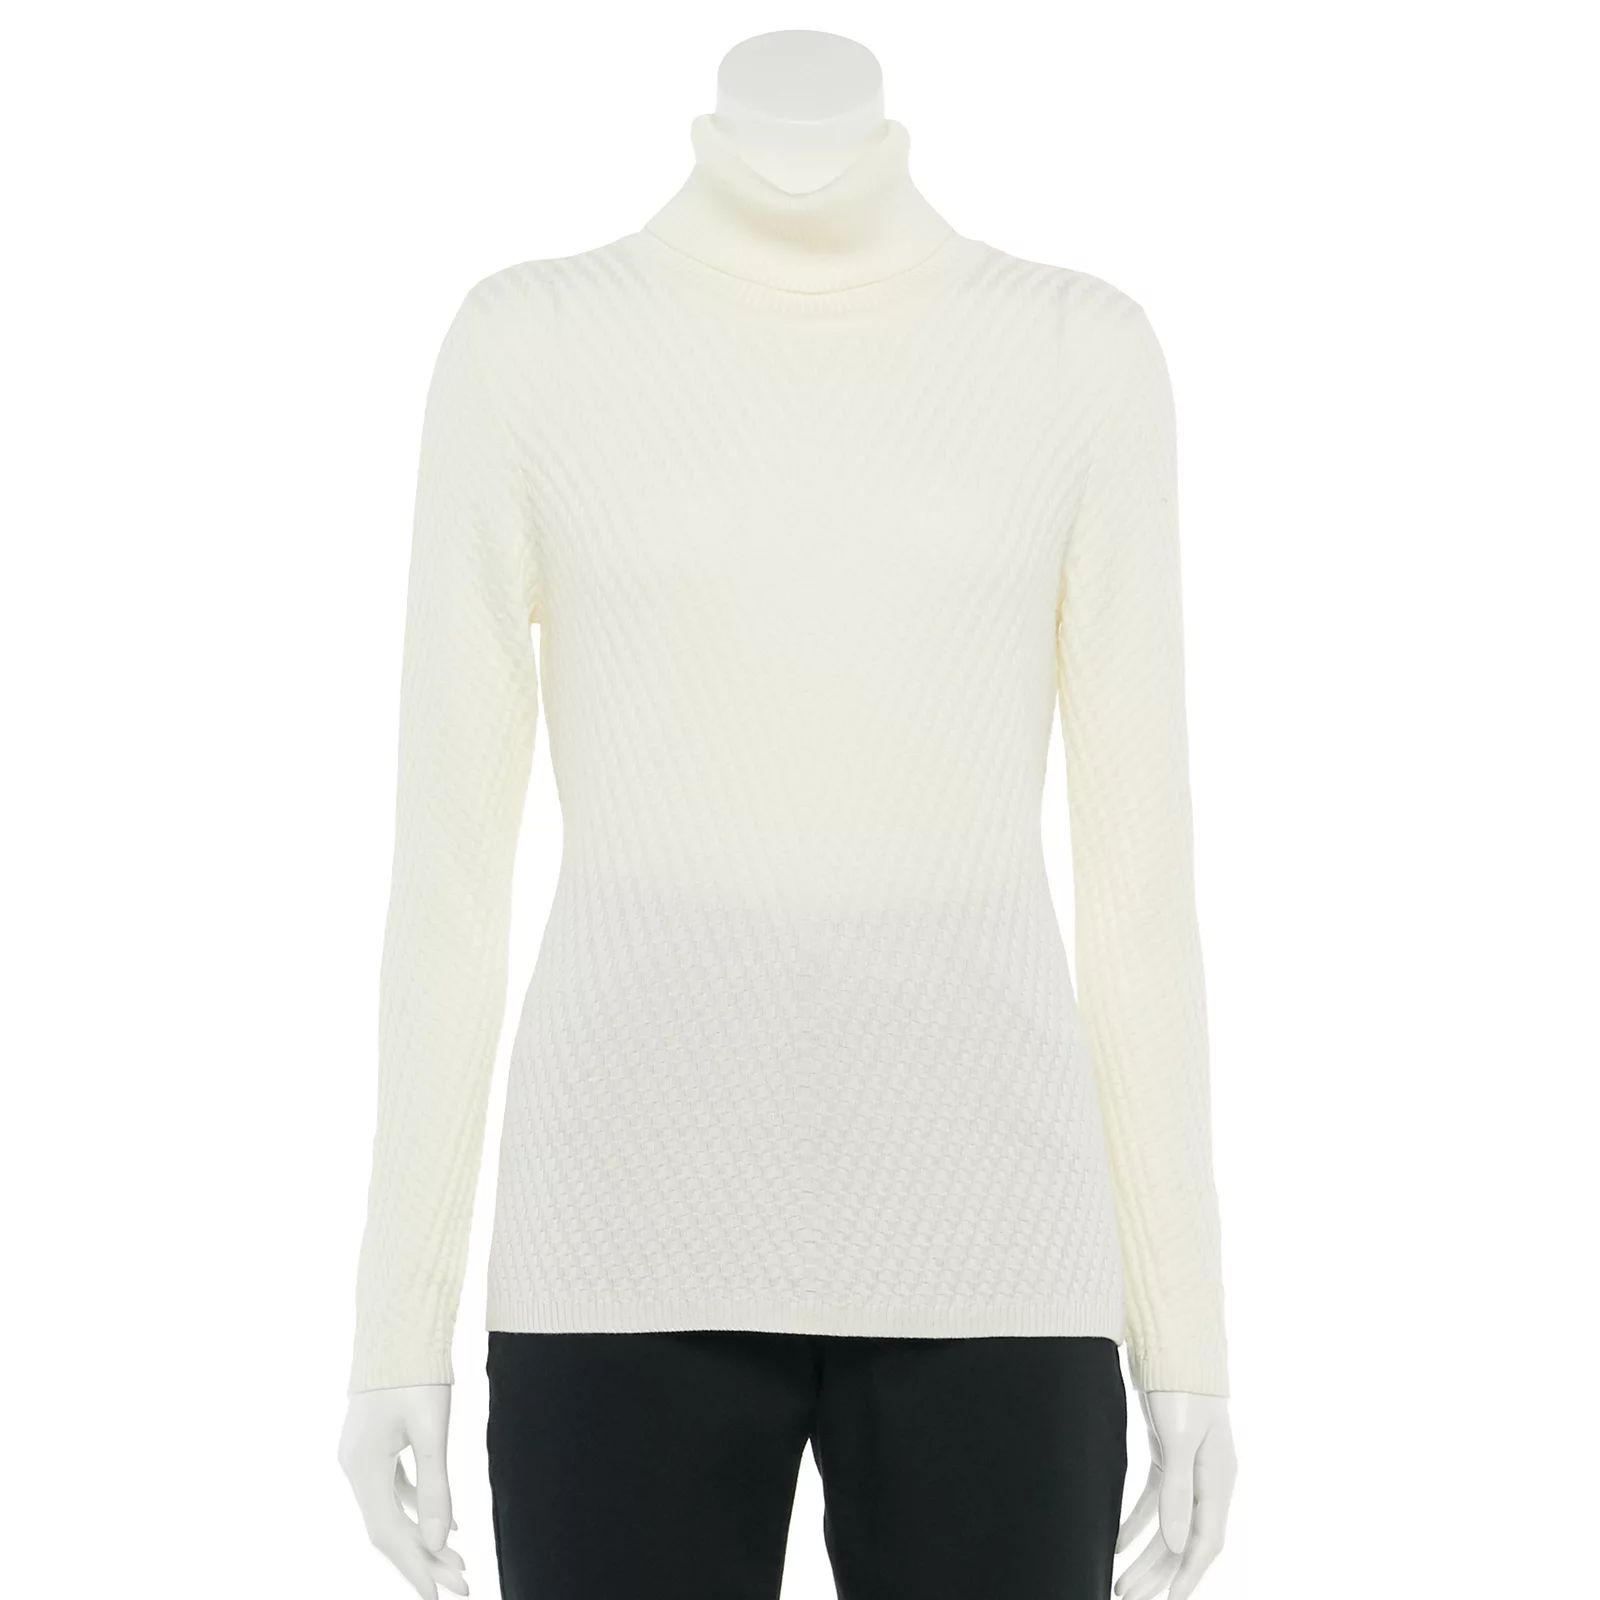 Petite Croft & Barrow Mitered Turtleneck Sweater, Women's, Size: Large Petite, White | Kohl's